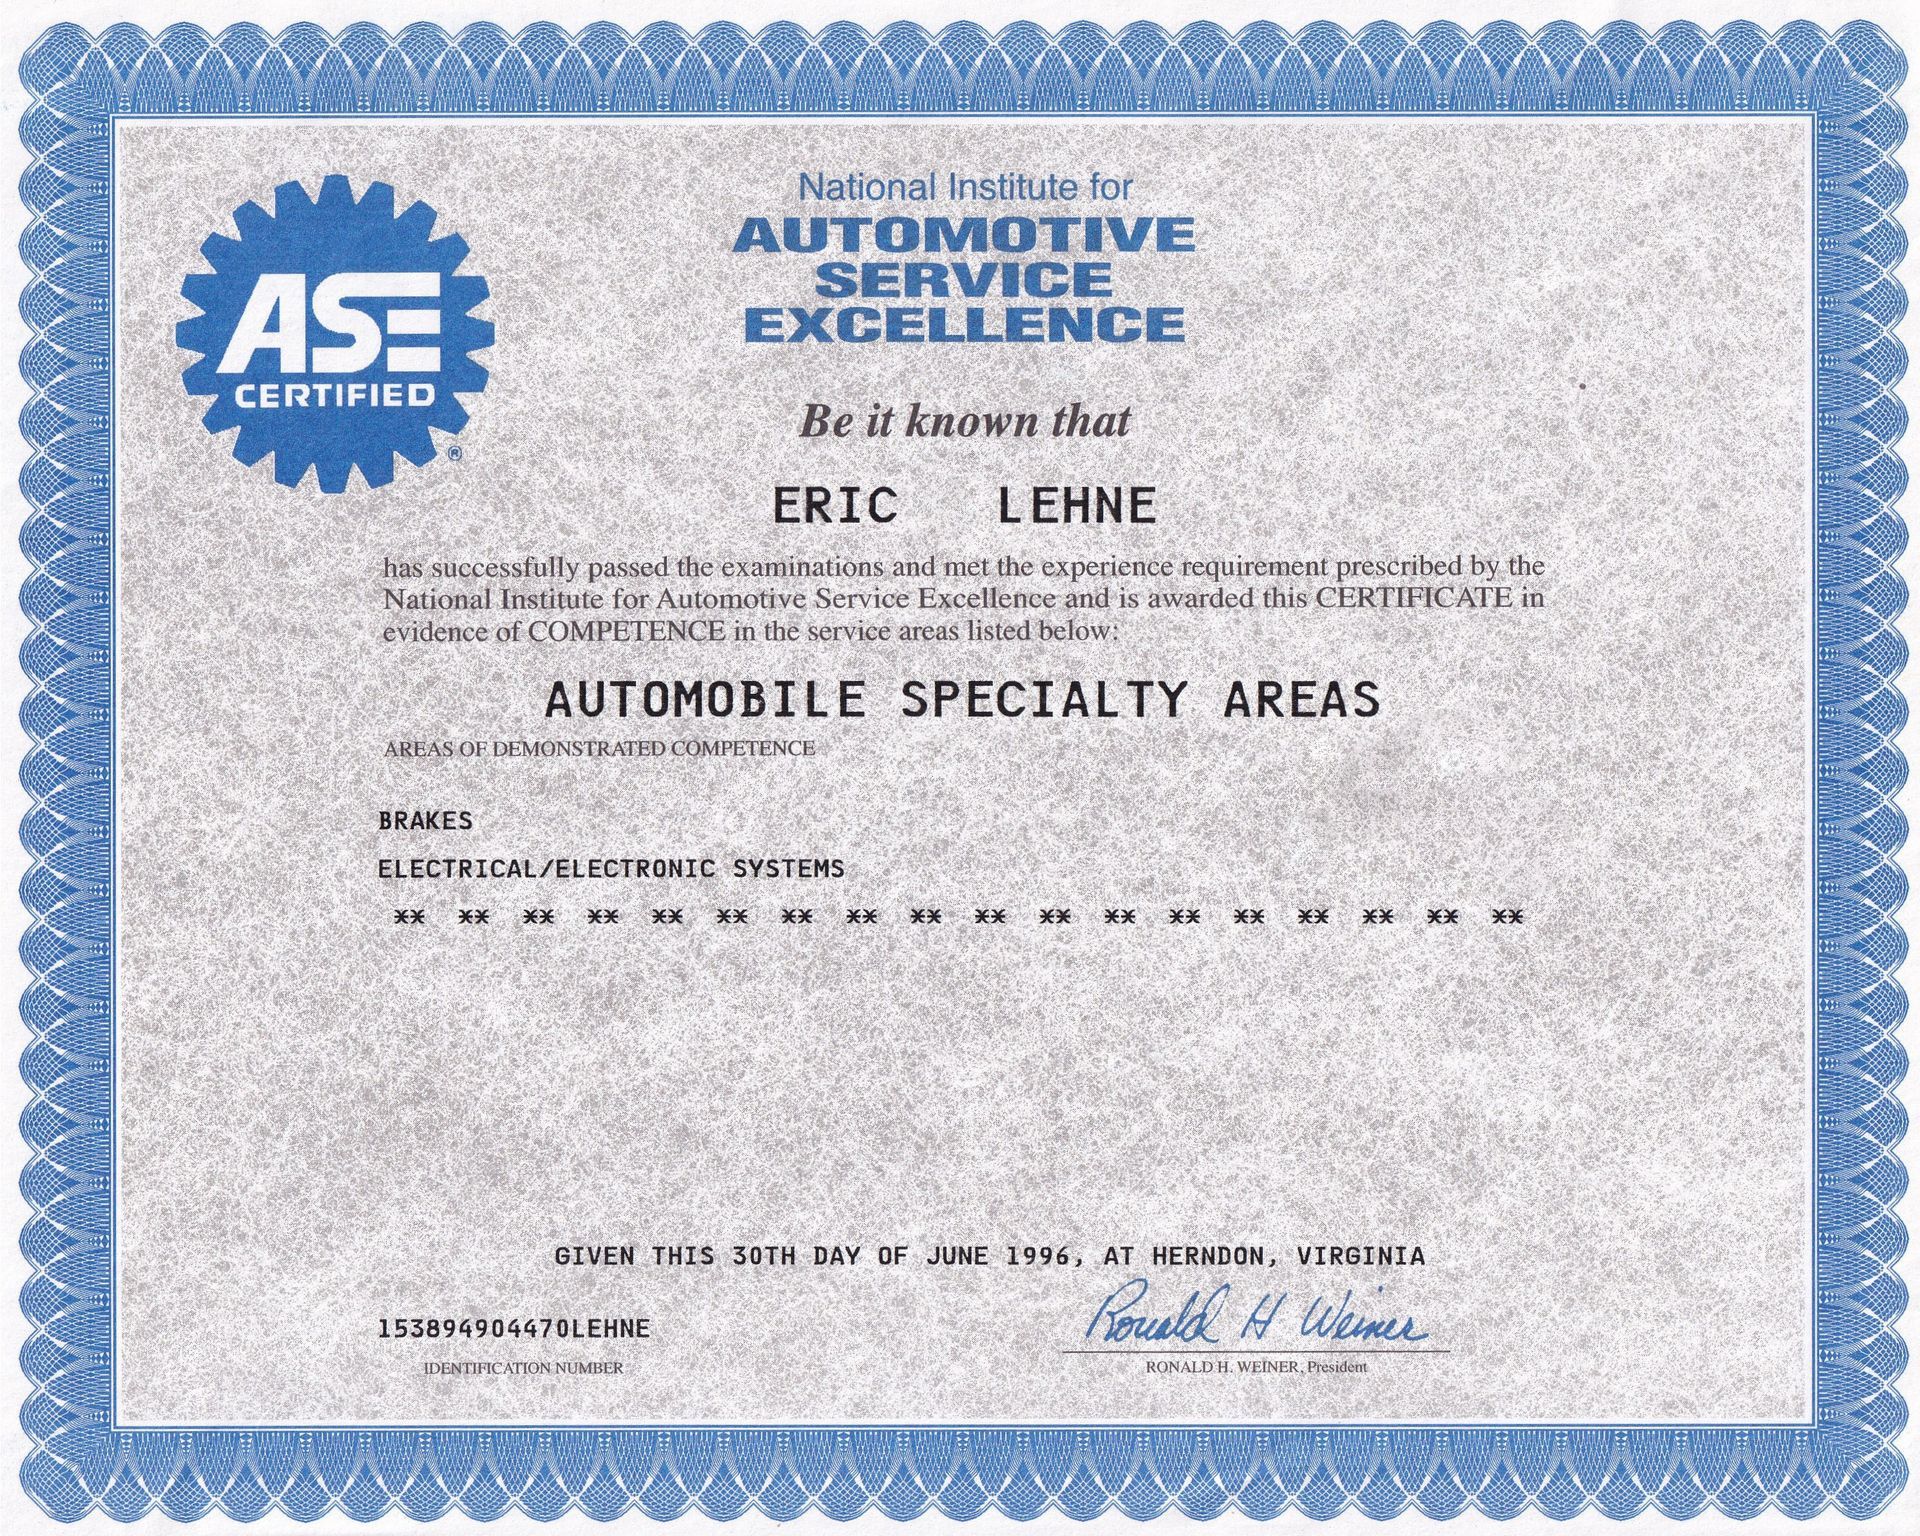 Hoffman's ASE certificate